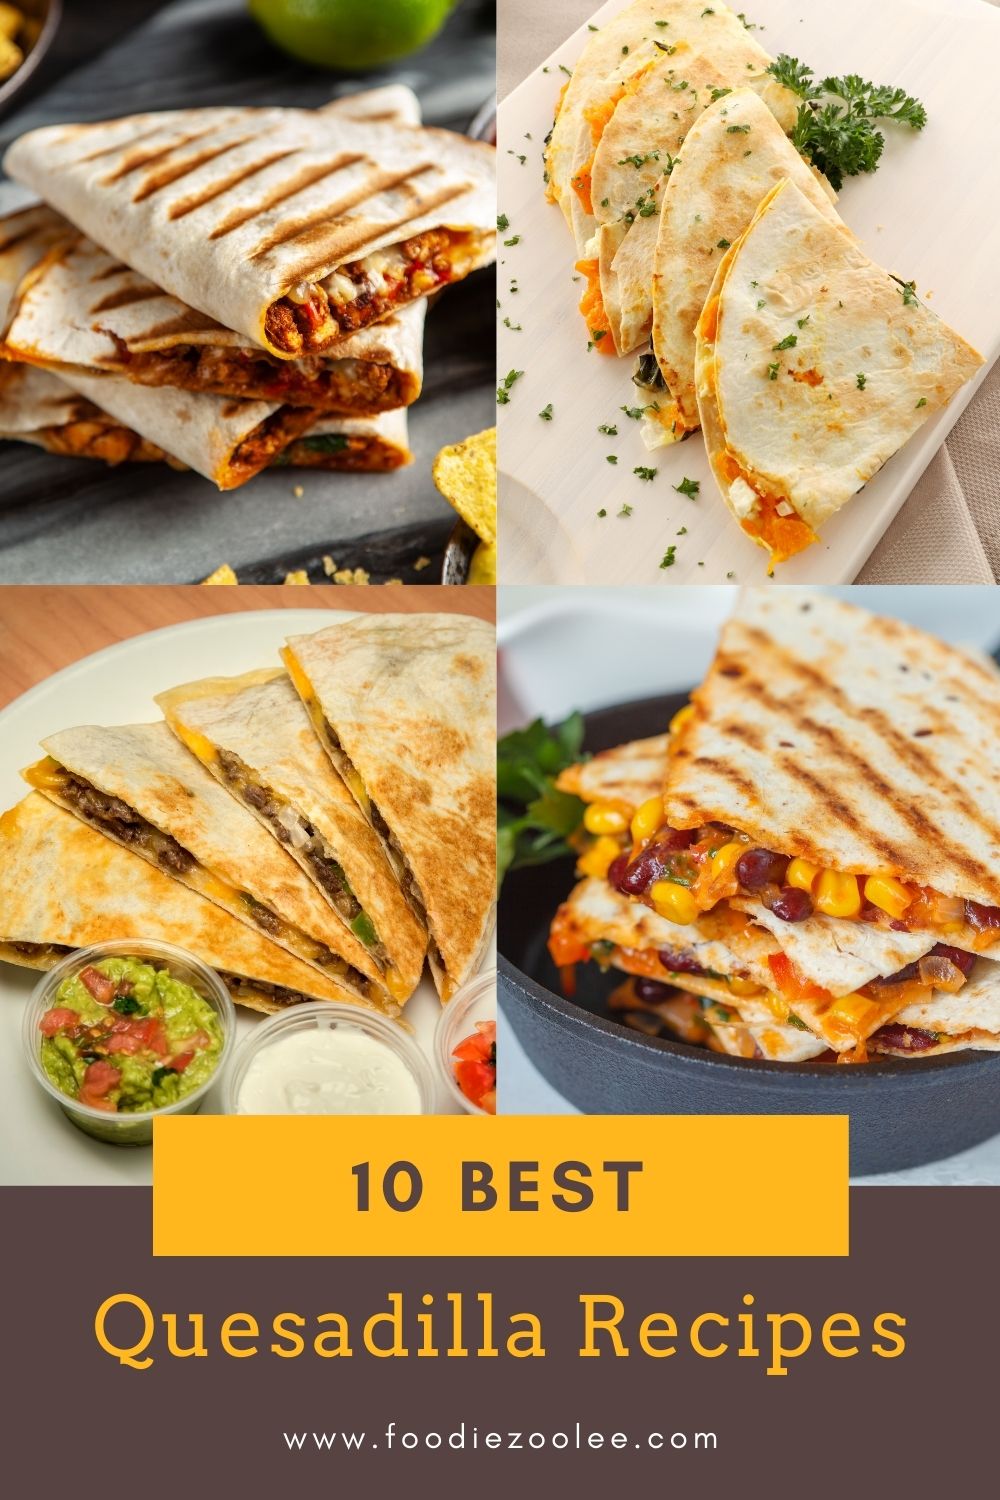 10 Quesadilla Recipes for National Quesadilla Day | FoodieZoolee